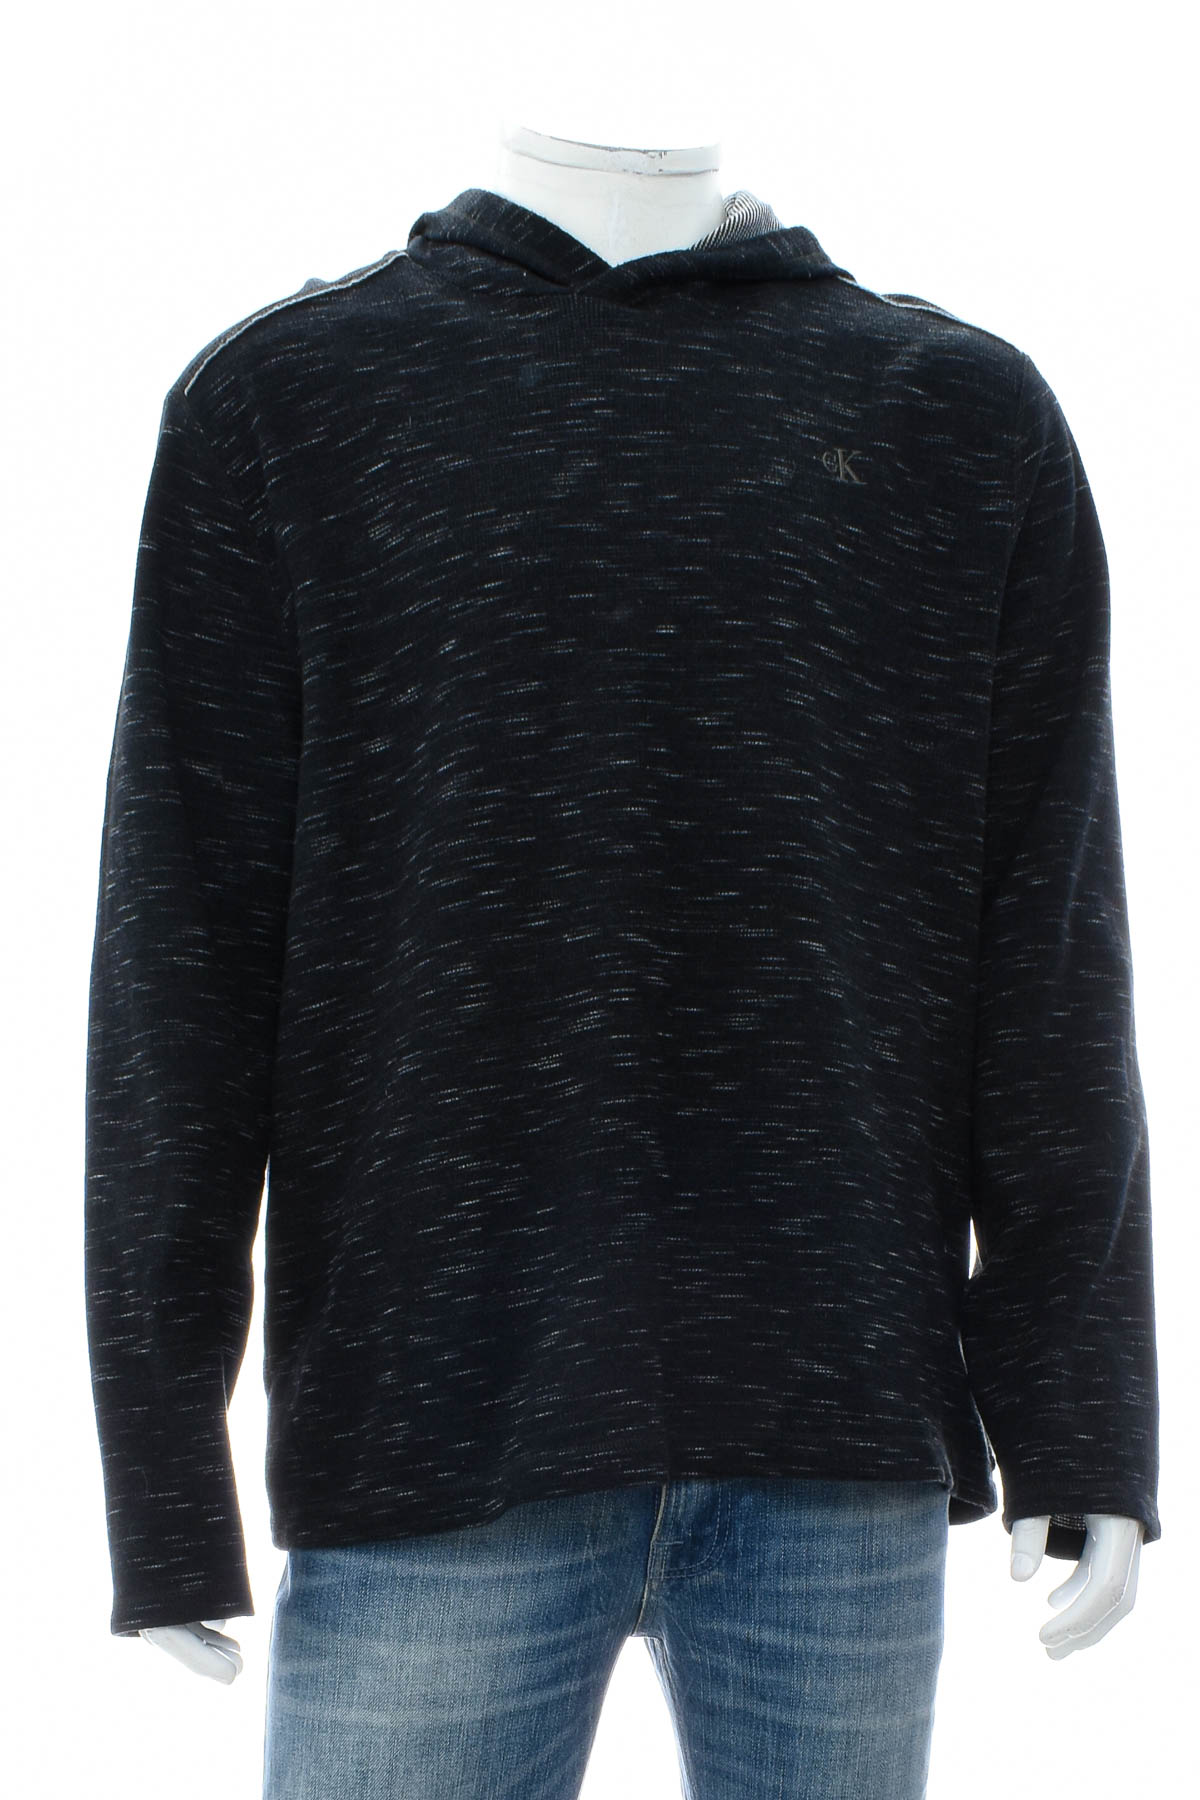 Men's sweater - Calvin Klein Jeans - 0